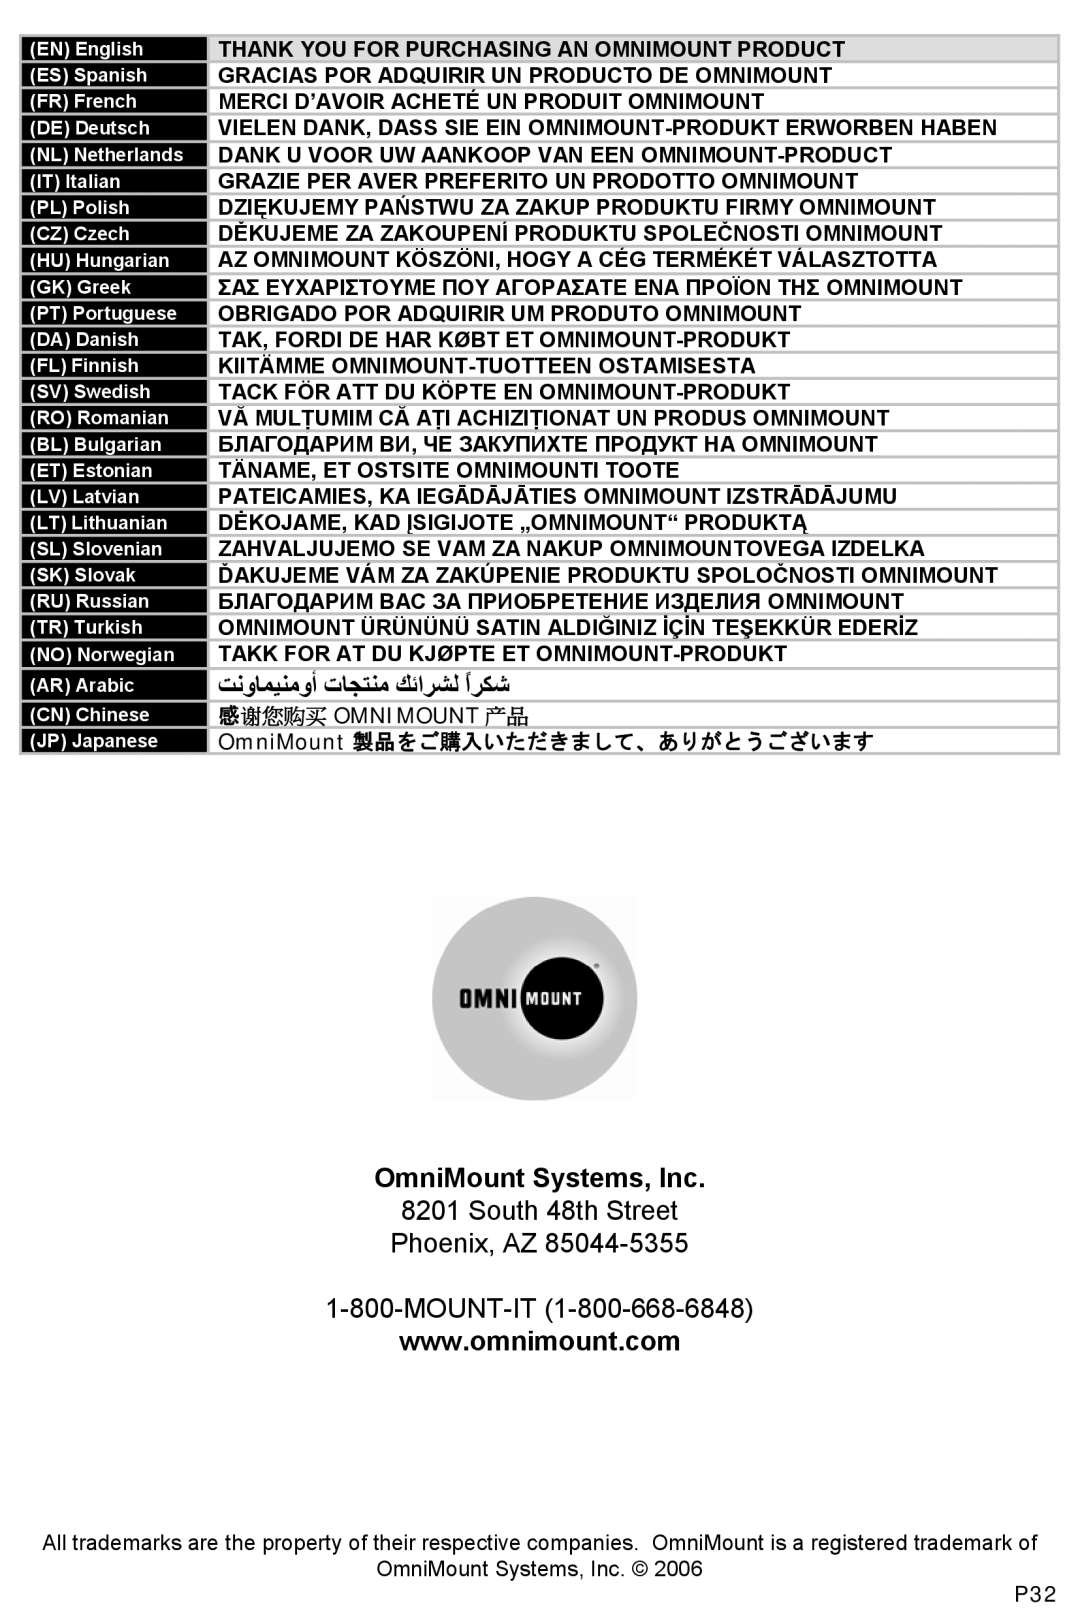 Omnimount OM10020 instruction manual OmniMount Systems, Inc, ﺖﻧوﺎﻤﻴﻨﻣوأ تﺎﺠﺘﻨﻣ ﻚﺋاﺮﺸﻟ اﺮﻜﺷً, 感谢您购买 Omnimount 产品 